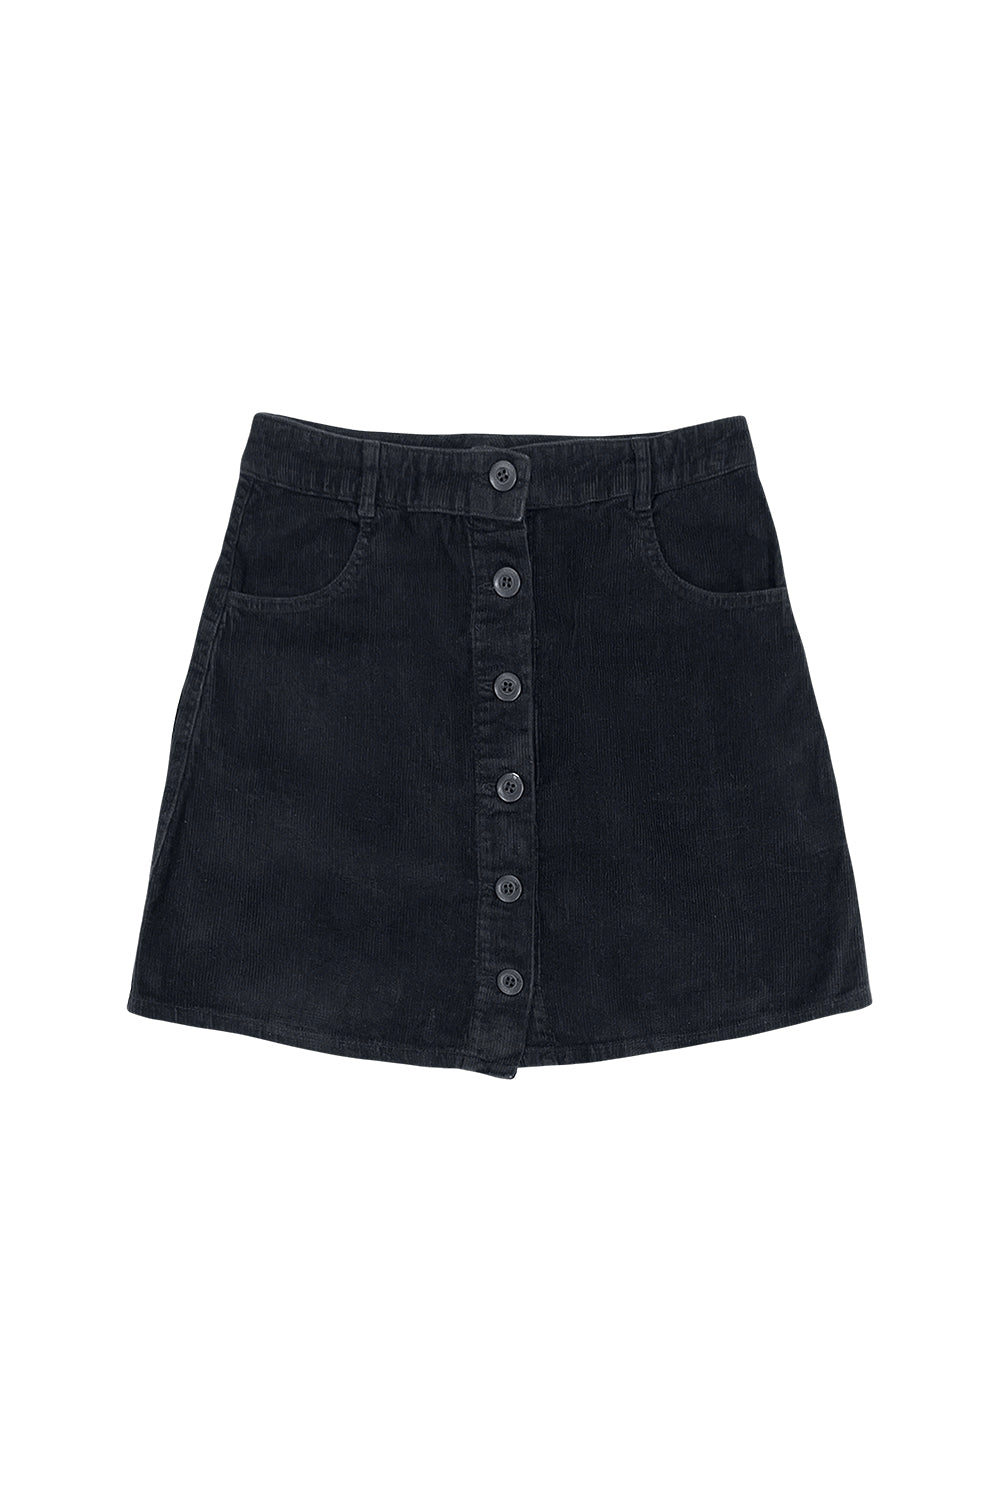 Corduroy Vassar Skirt | Jungmaven Hemp Clothing & Accessories / Color: Black